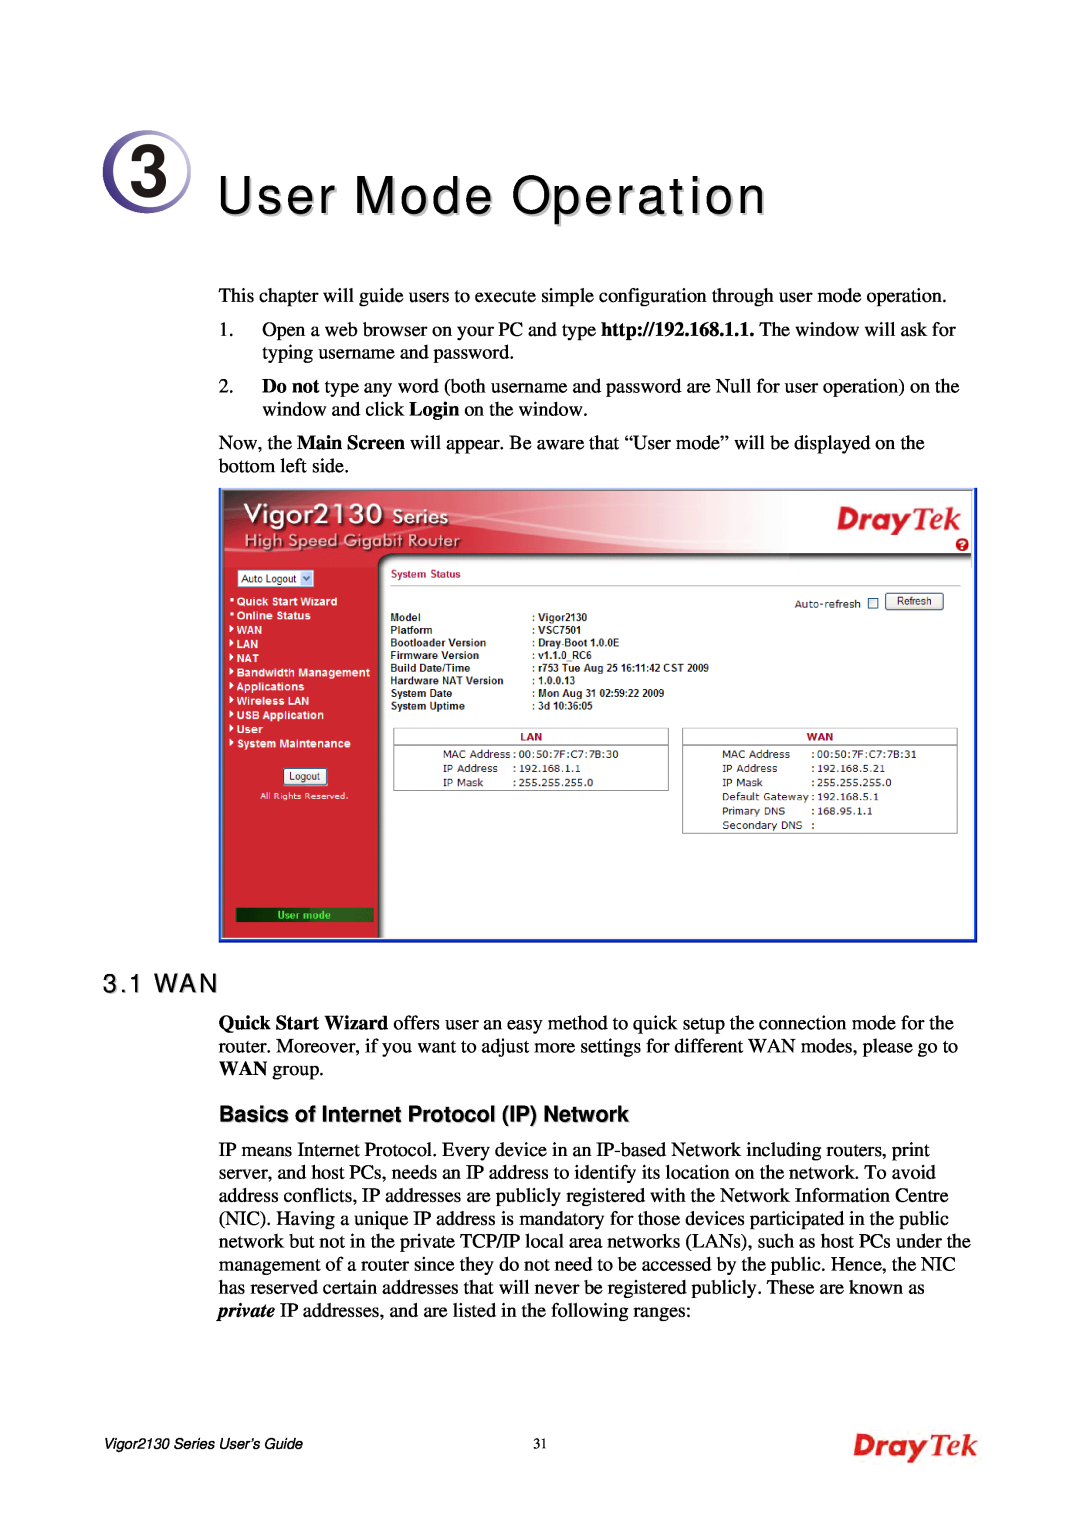 Draytek 2130 manual User Mode Operation, 3.1 WAN, Basics of Internet Protocol IP Network 